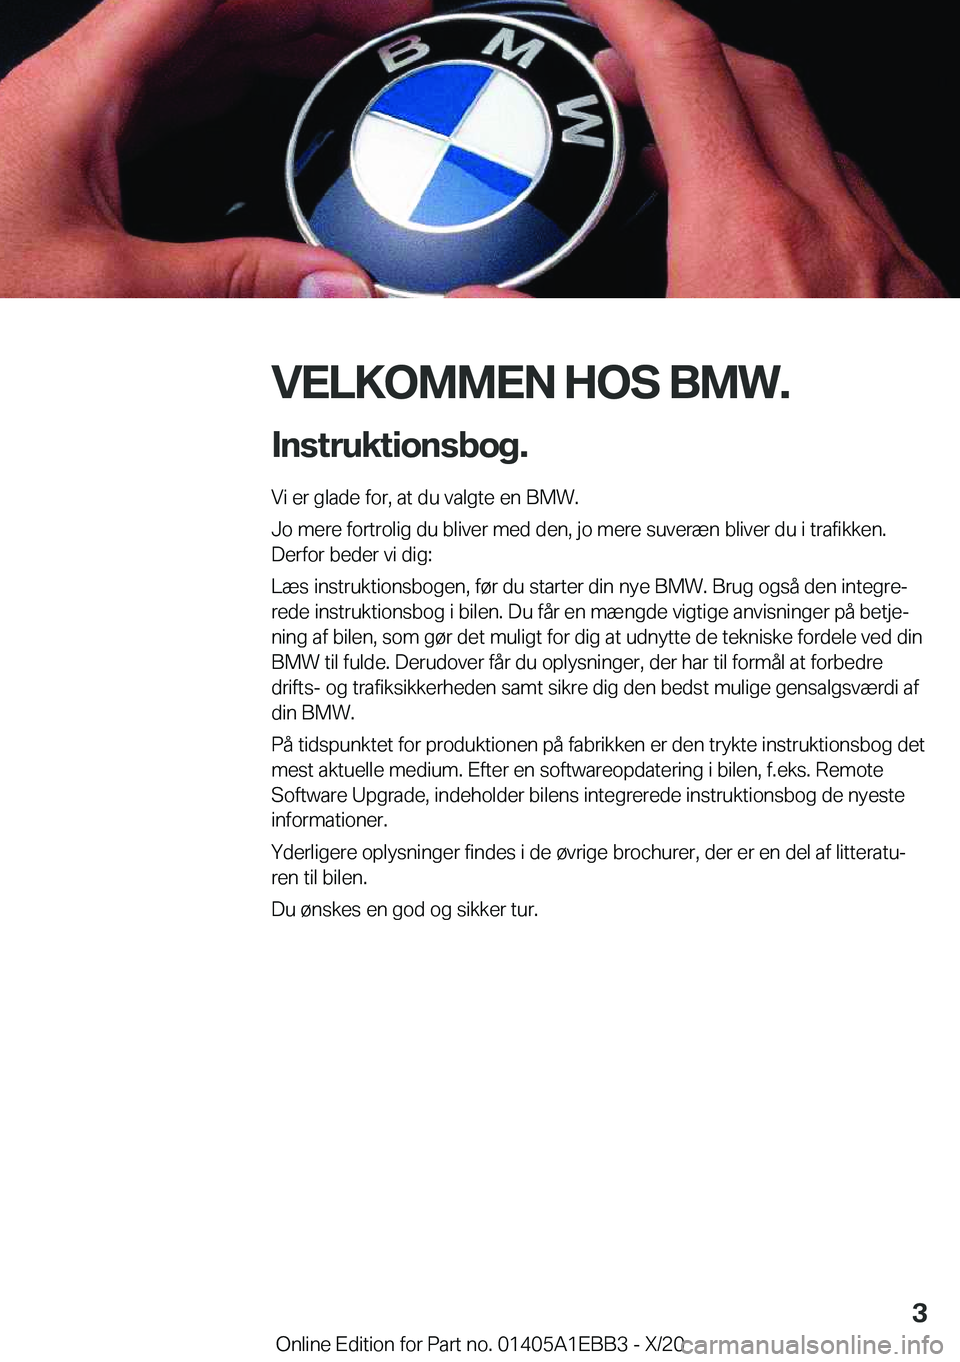 BMW 3 SERIES 2021  InstruktionsbØger (in Danish) �V�E�L�K�O�M�M�E�N��H�O�S��B�M�W�.
�I�n�s�t�r�u�k�t�i�o�n�s�b�o�g�. �V�i��e�r��g�l�a�d�e��f�o�r�,��a�t��d�u��v�a�l�g�t�e��e�n��B�M�W�.
�J�o��m�e�r�e��f�o�r�t�r�o�l�i�g��d�u��b�l�i�v�e�r�